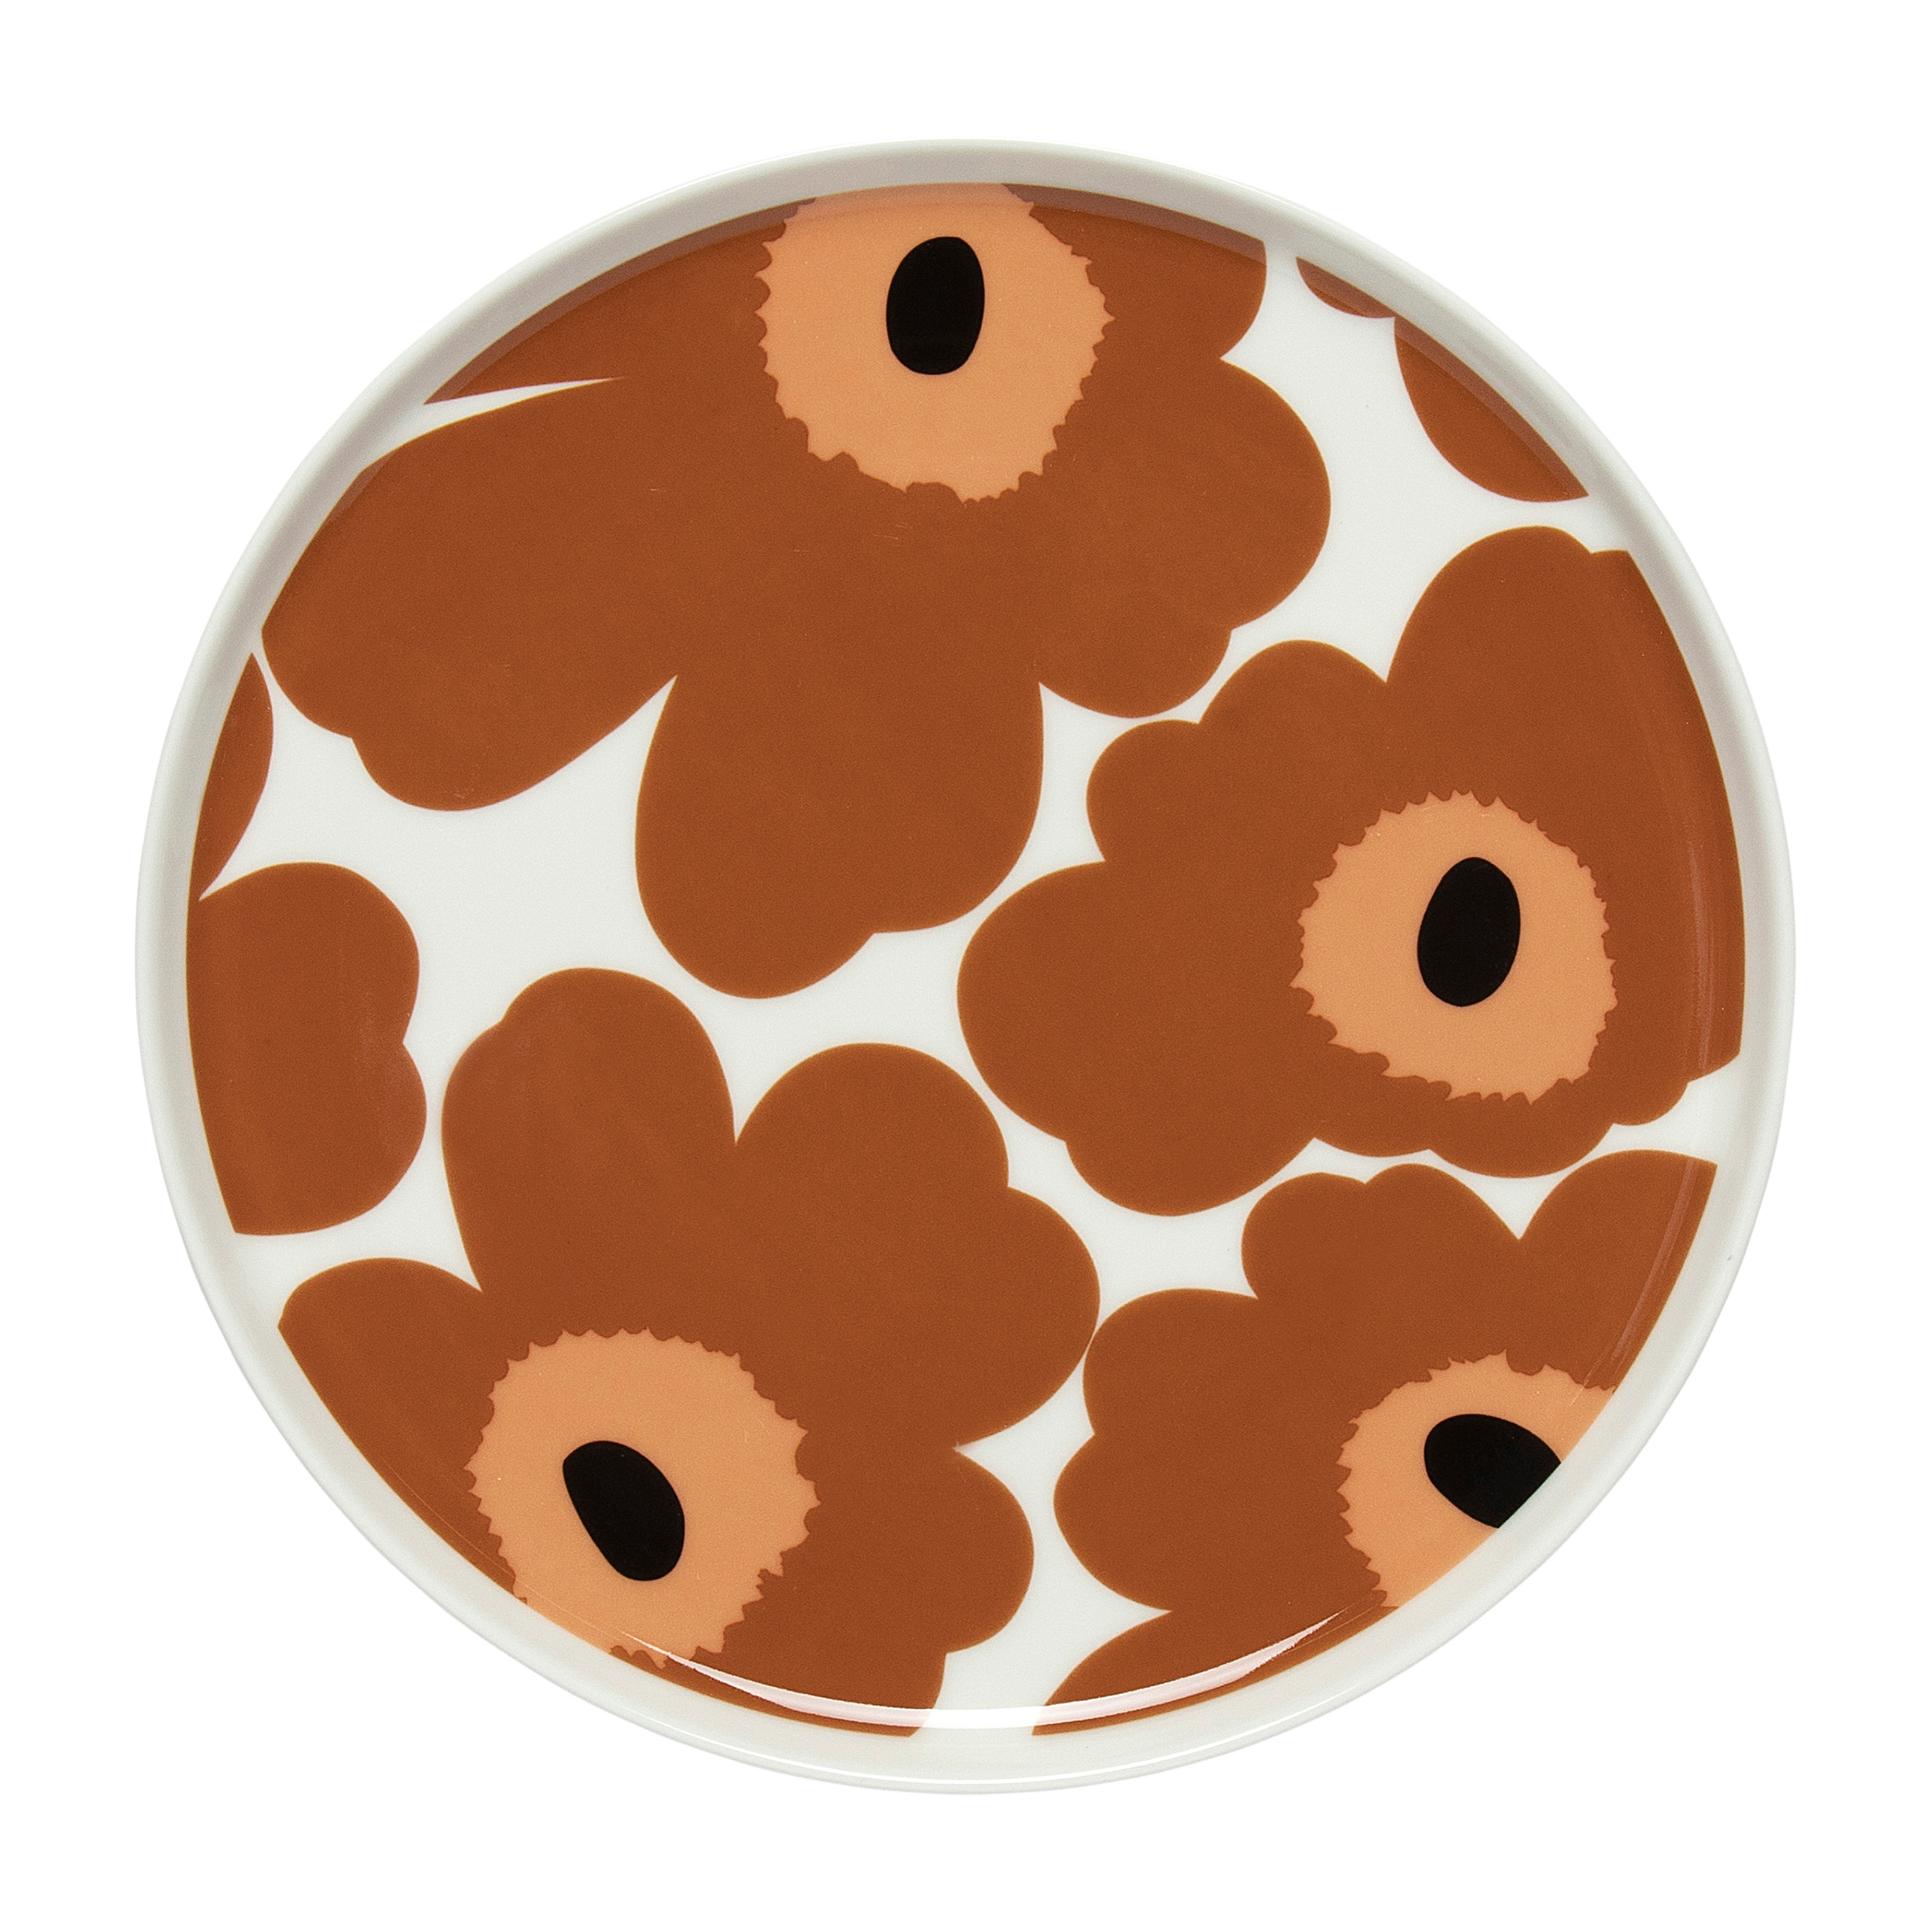 Unikko plate white-brown-black from Marimekko 